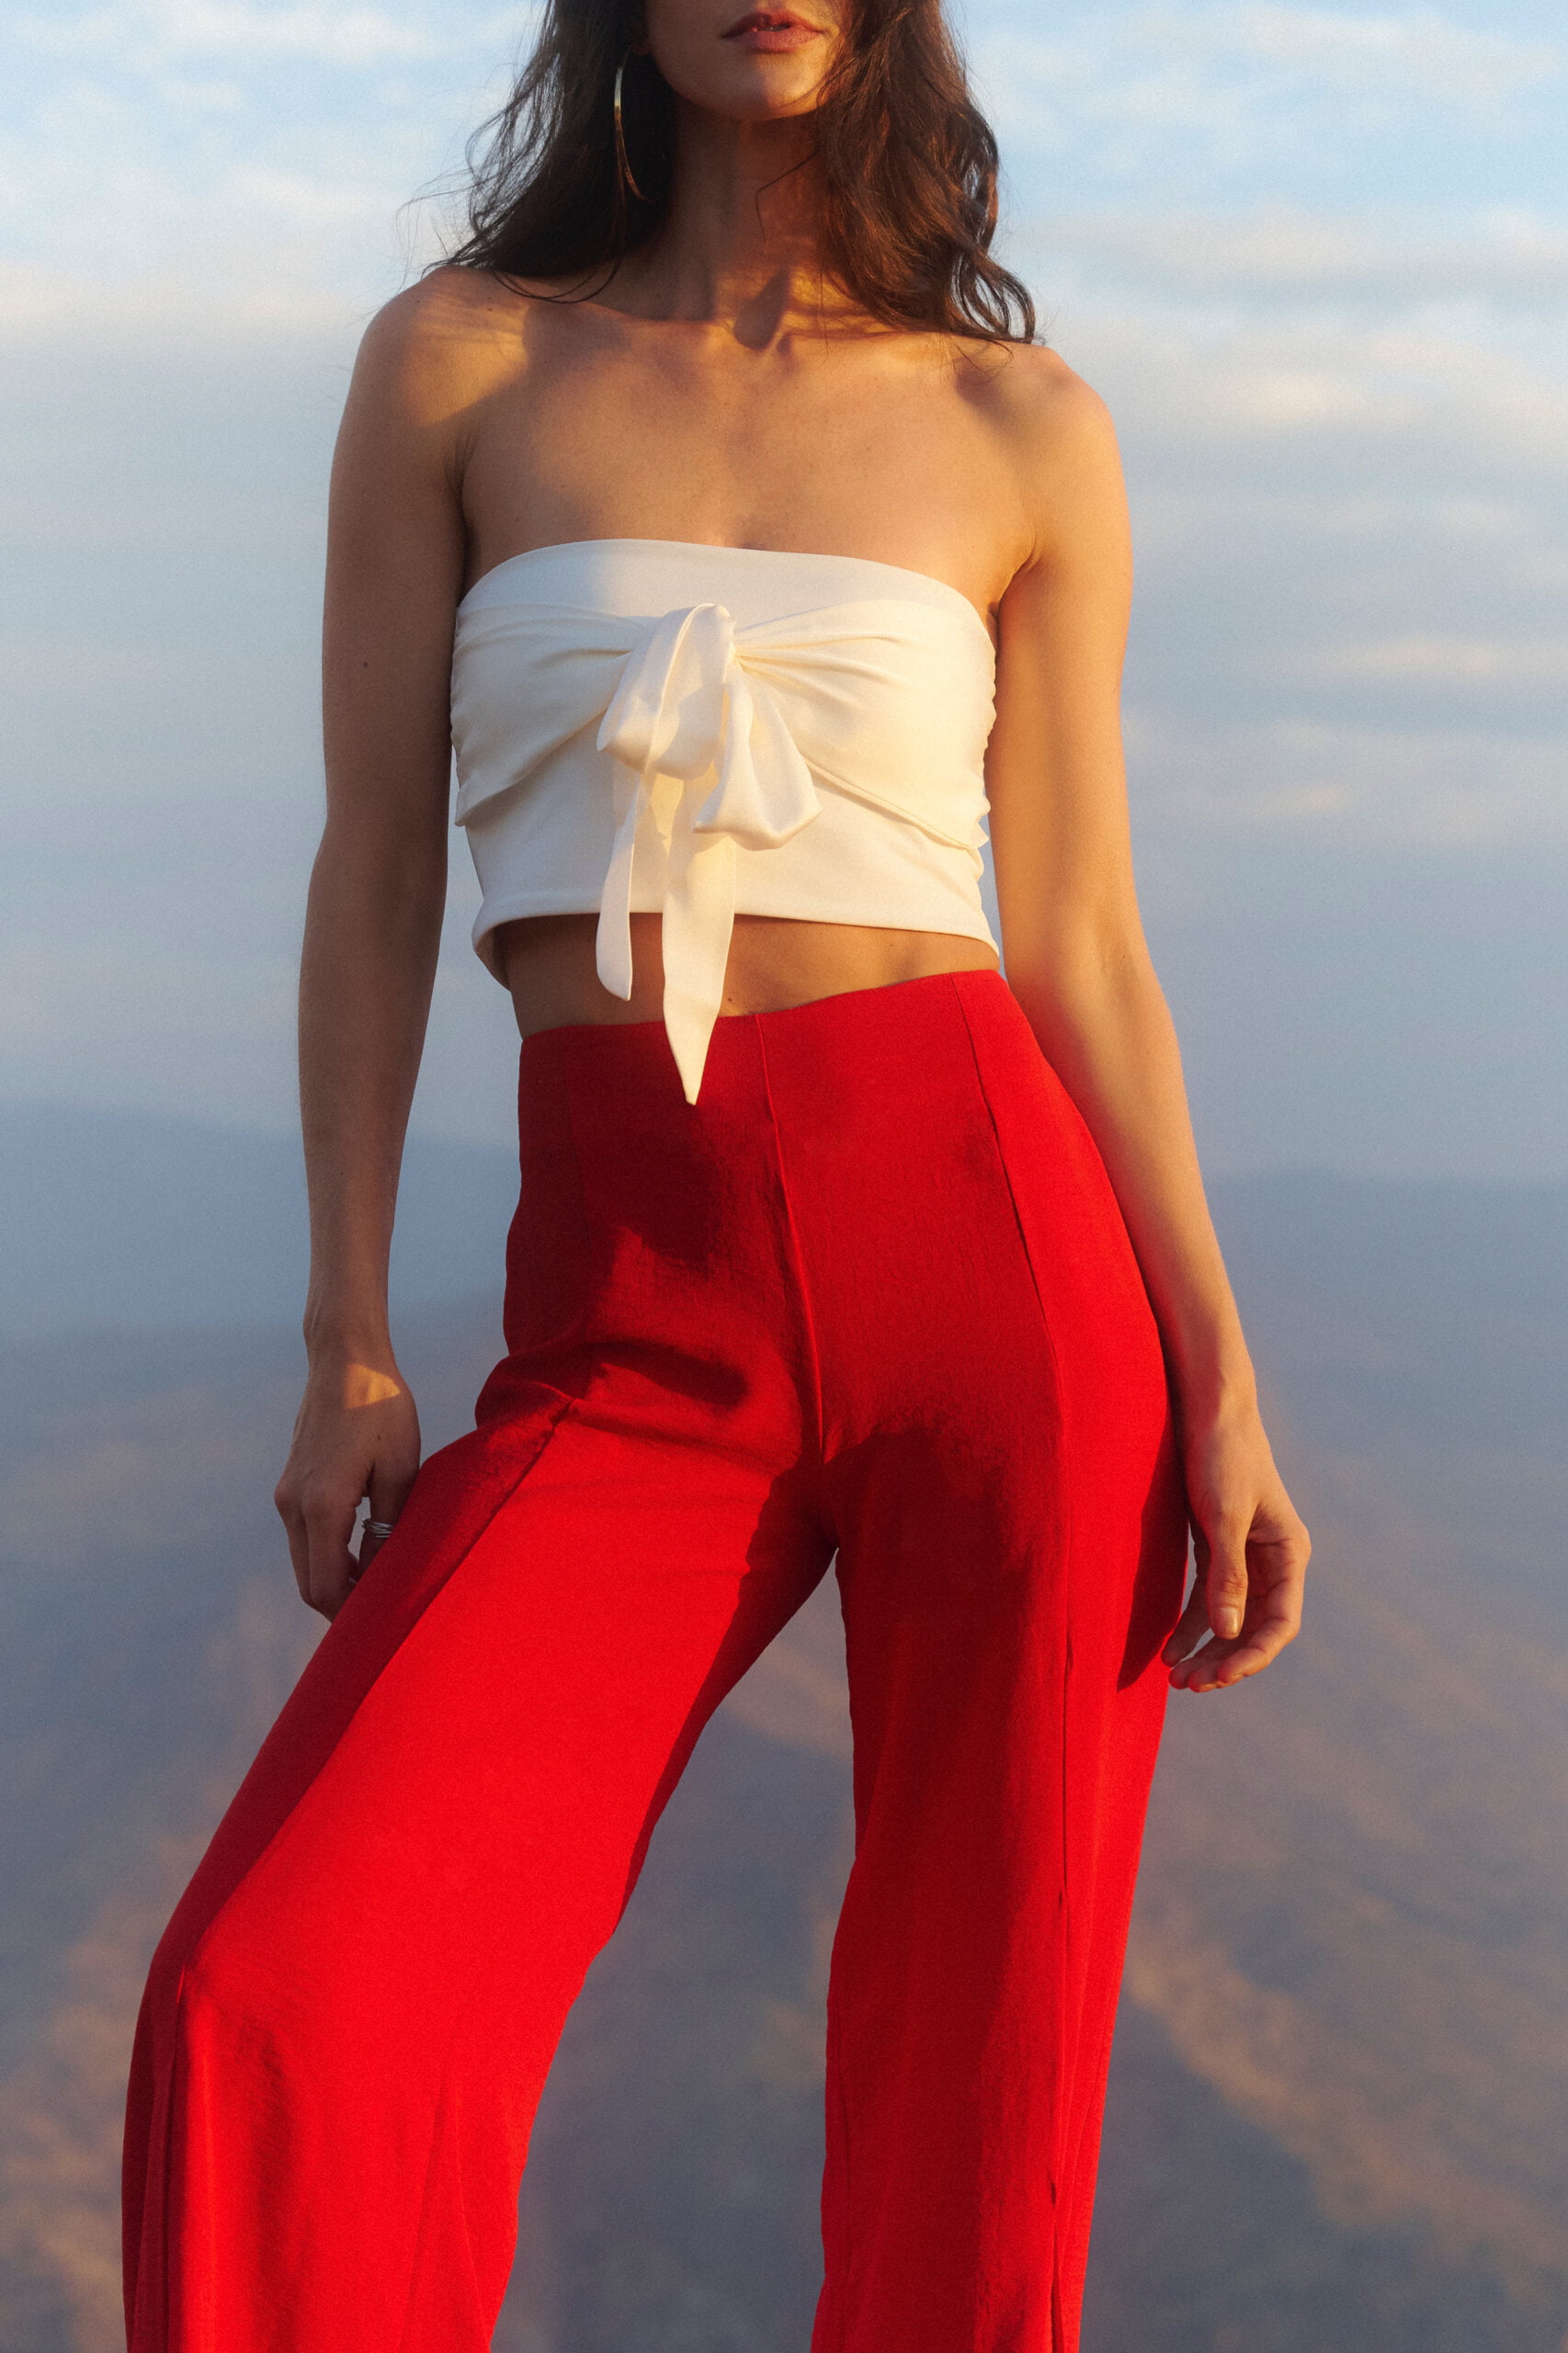 Pantalón Milka pantalon flare de tela con tajo, pantalon rojo combinado con top de lycra y seda